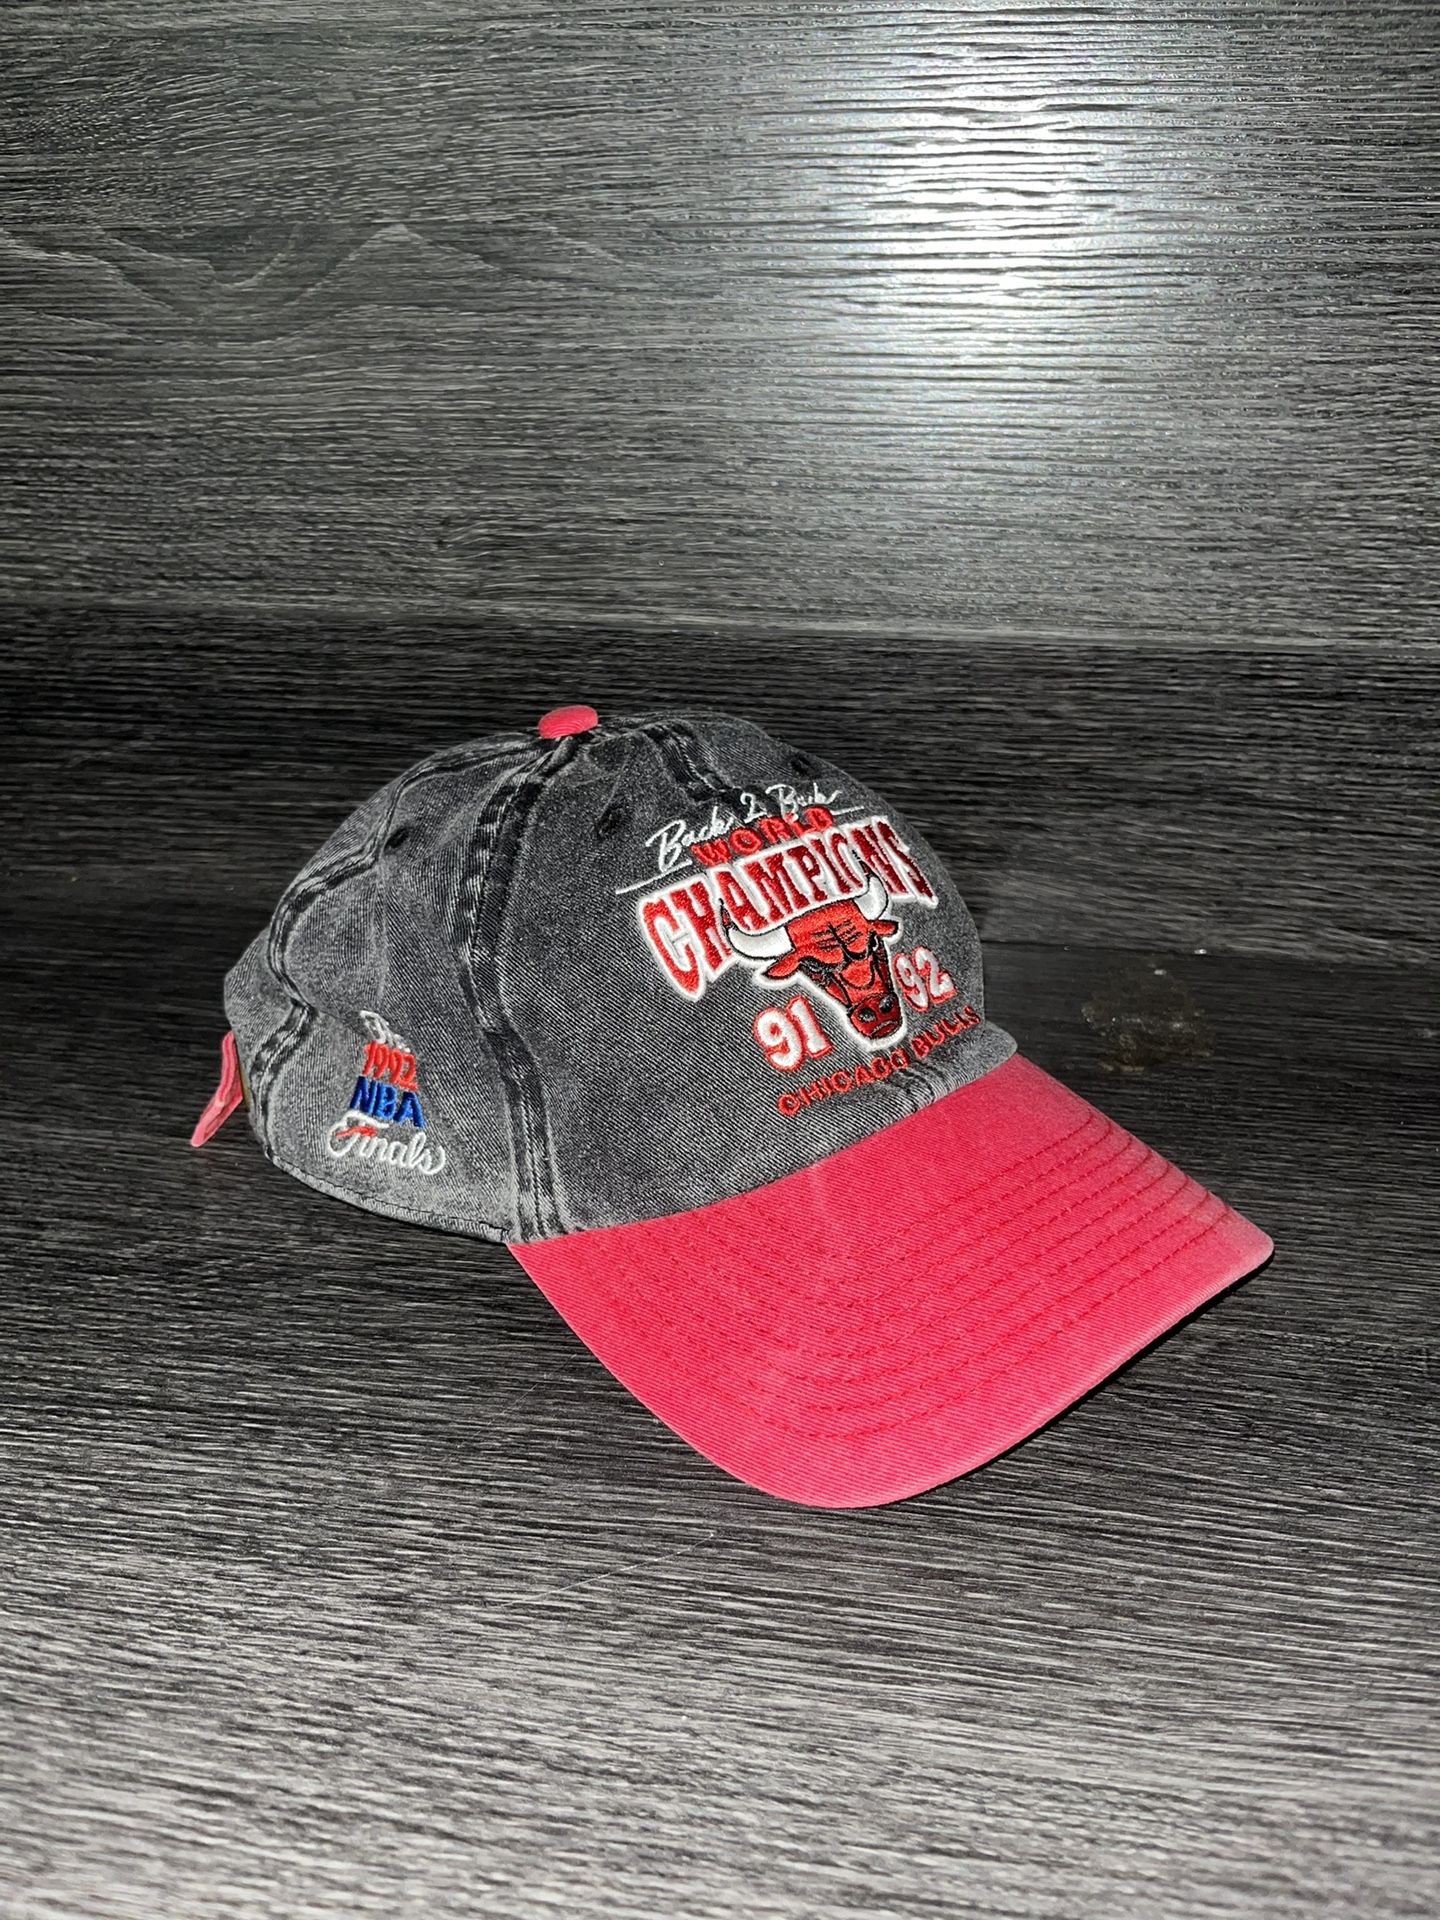 Chicago Bulls Vintage 1(contact info removed) Finals Hat Back To Back - Original 1992 Hat